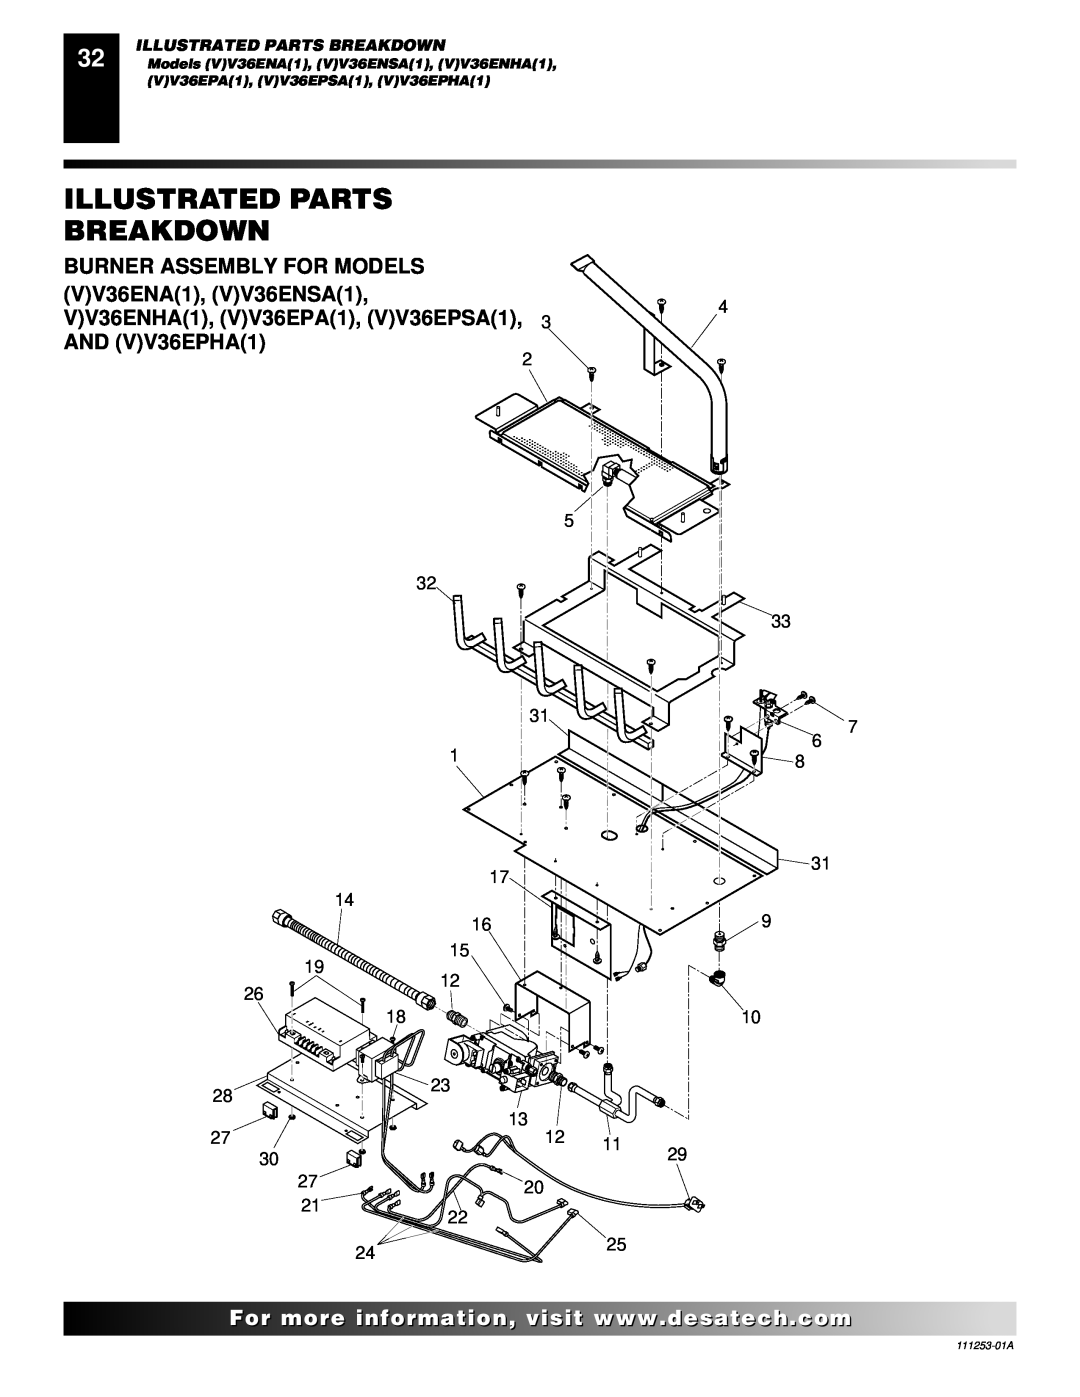 Desa (V)V36ENA(1), (V)V36EPA(1) installation manual AND VV36EPHA1, Illustrated Parts Breakdown 